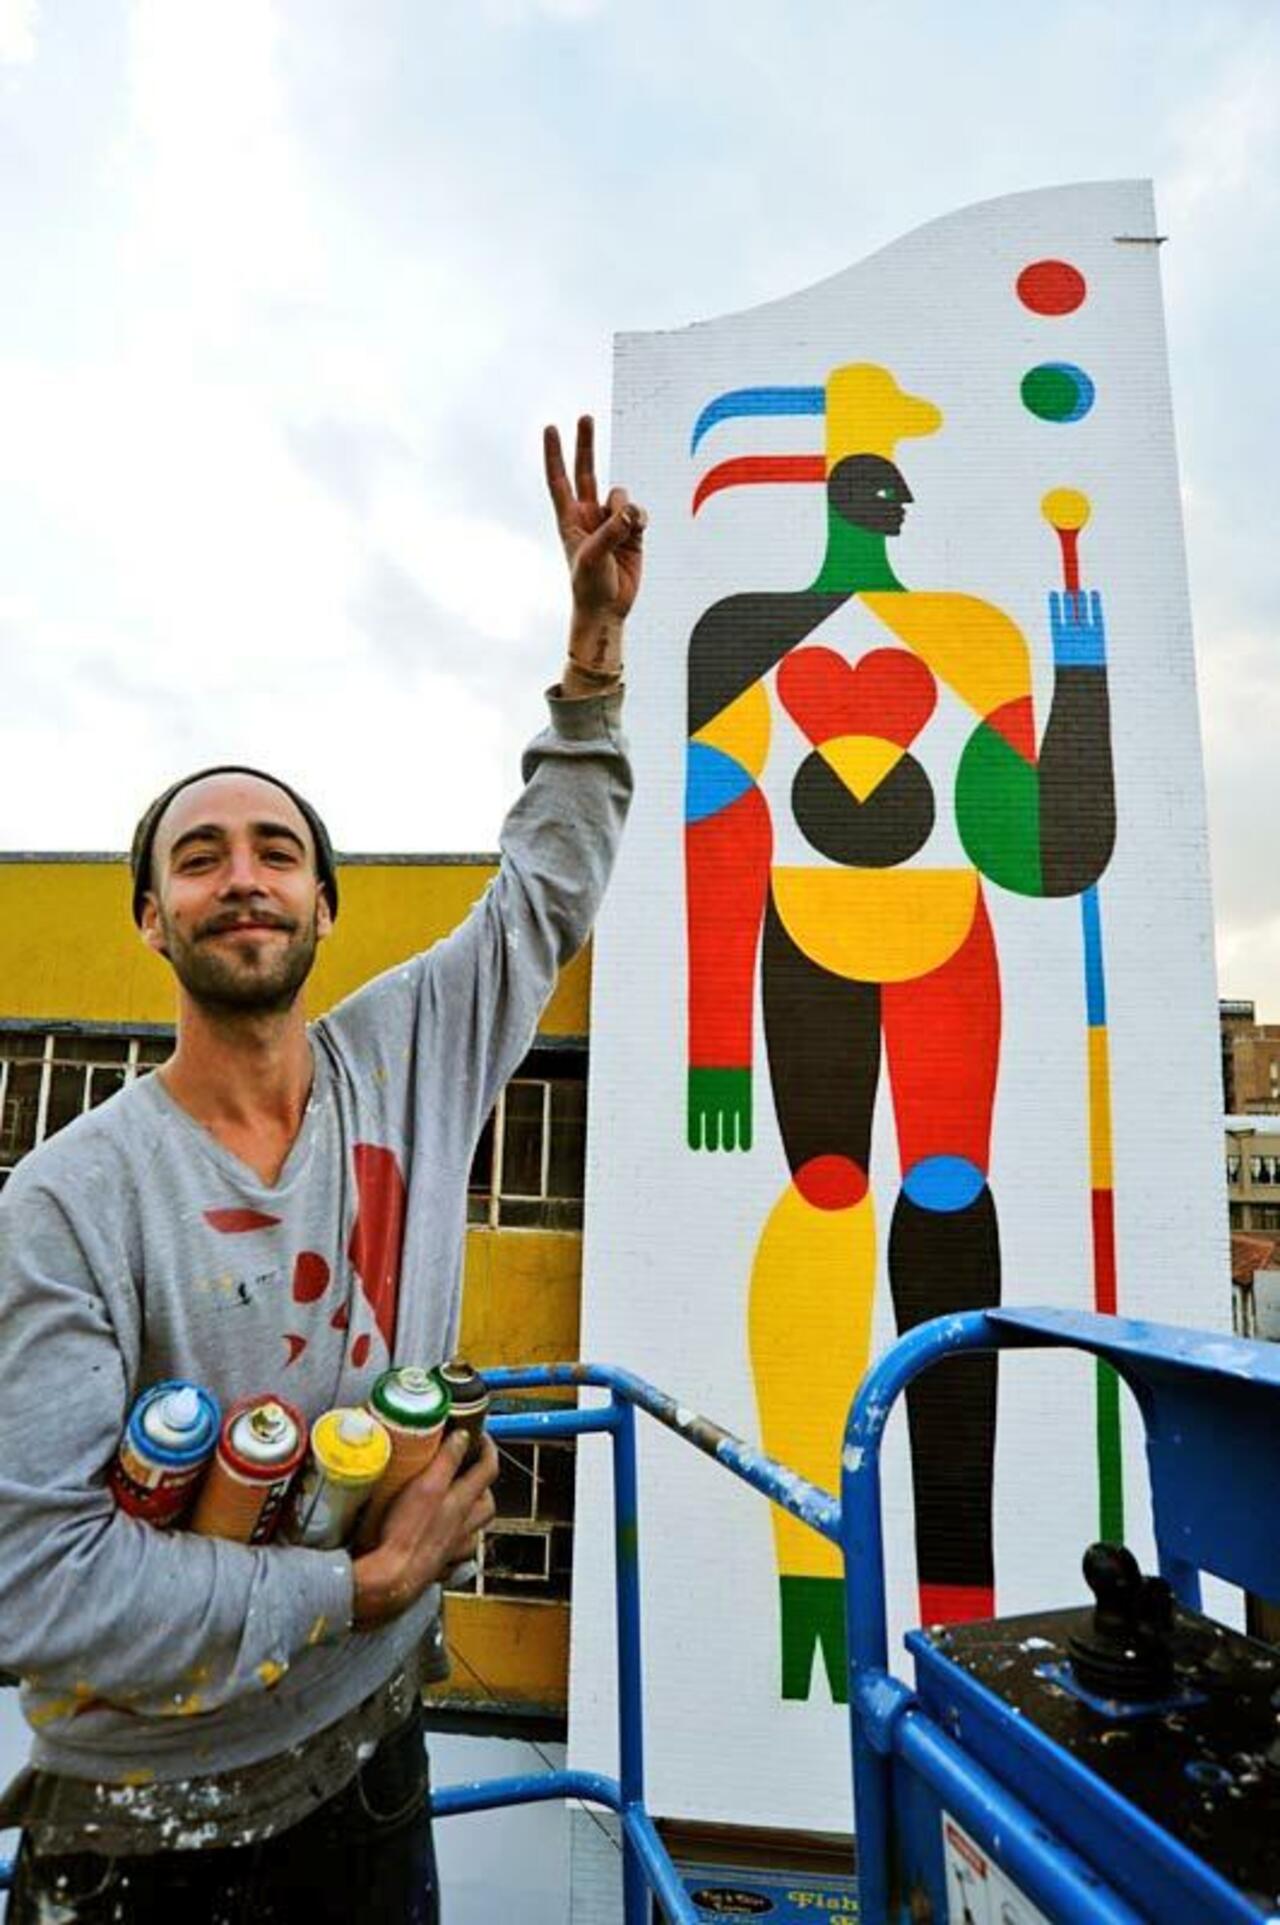 ✌"@Pitchuskita: Remed 
South Africa 
#streetart #art #graffiti #mural http://t.co/C7d9fsUxhd"